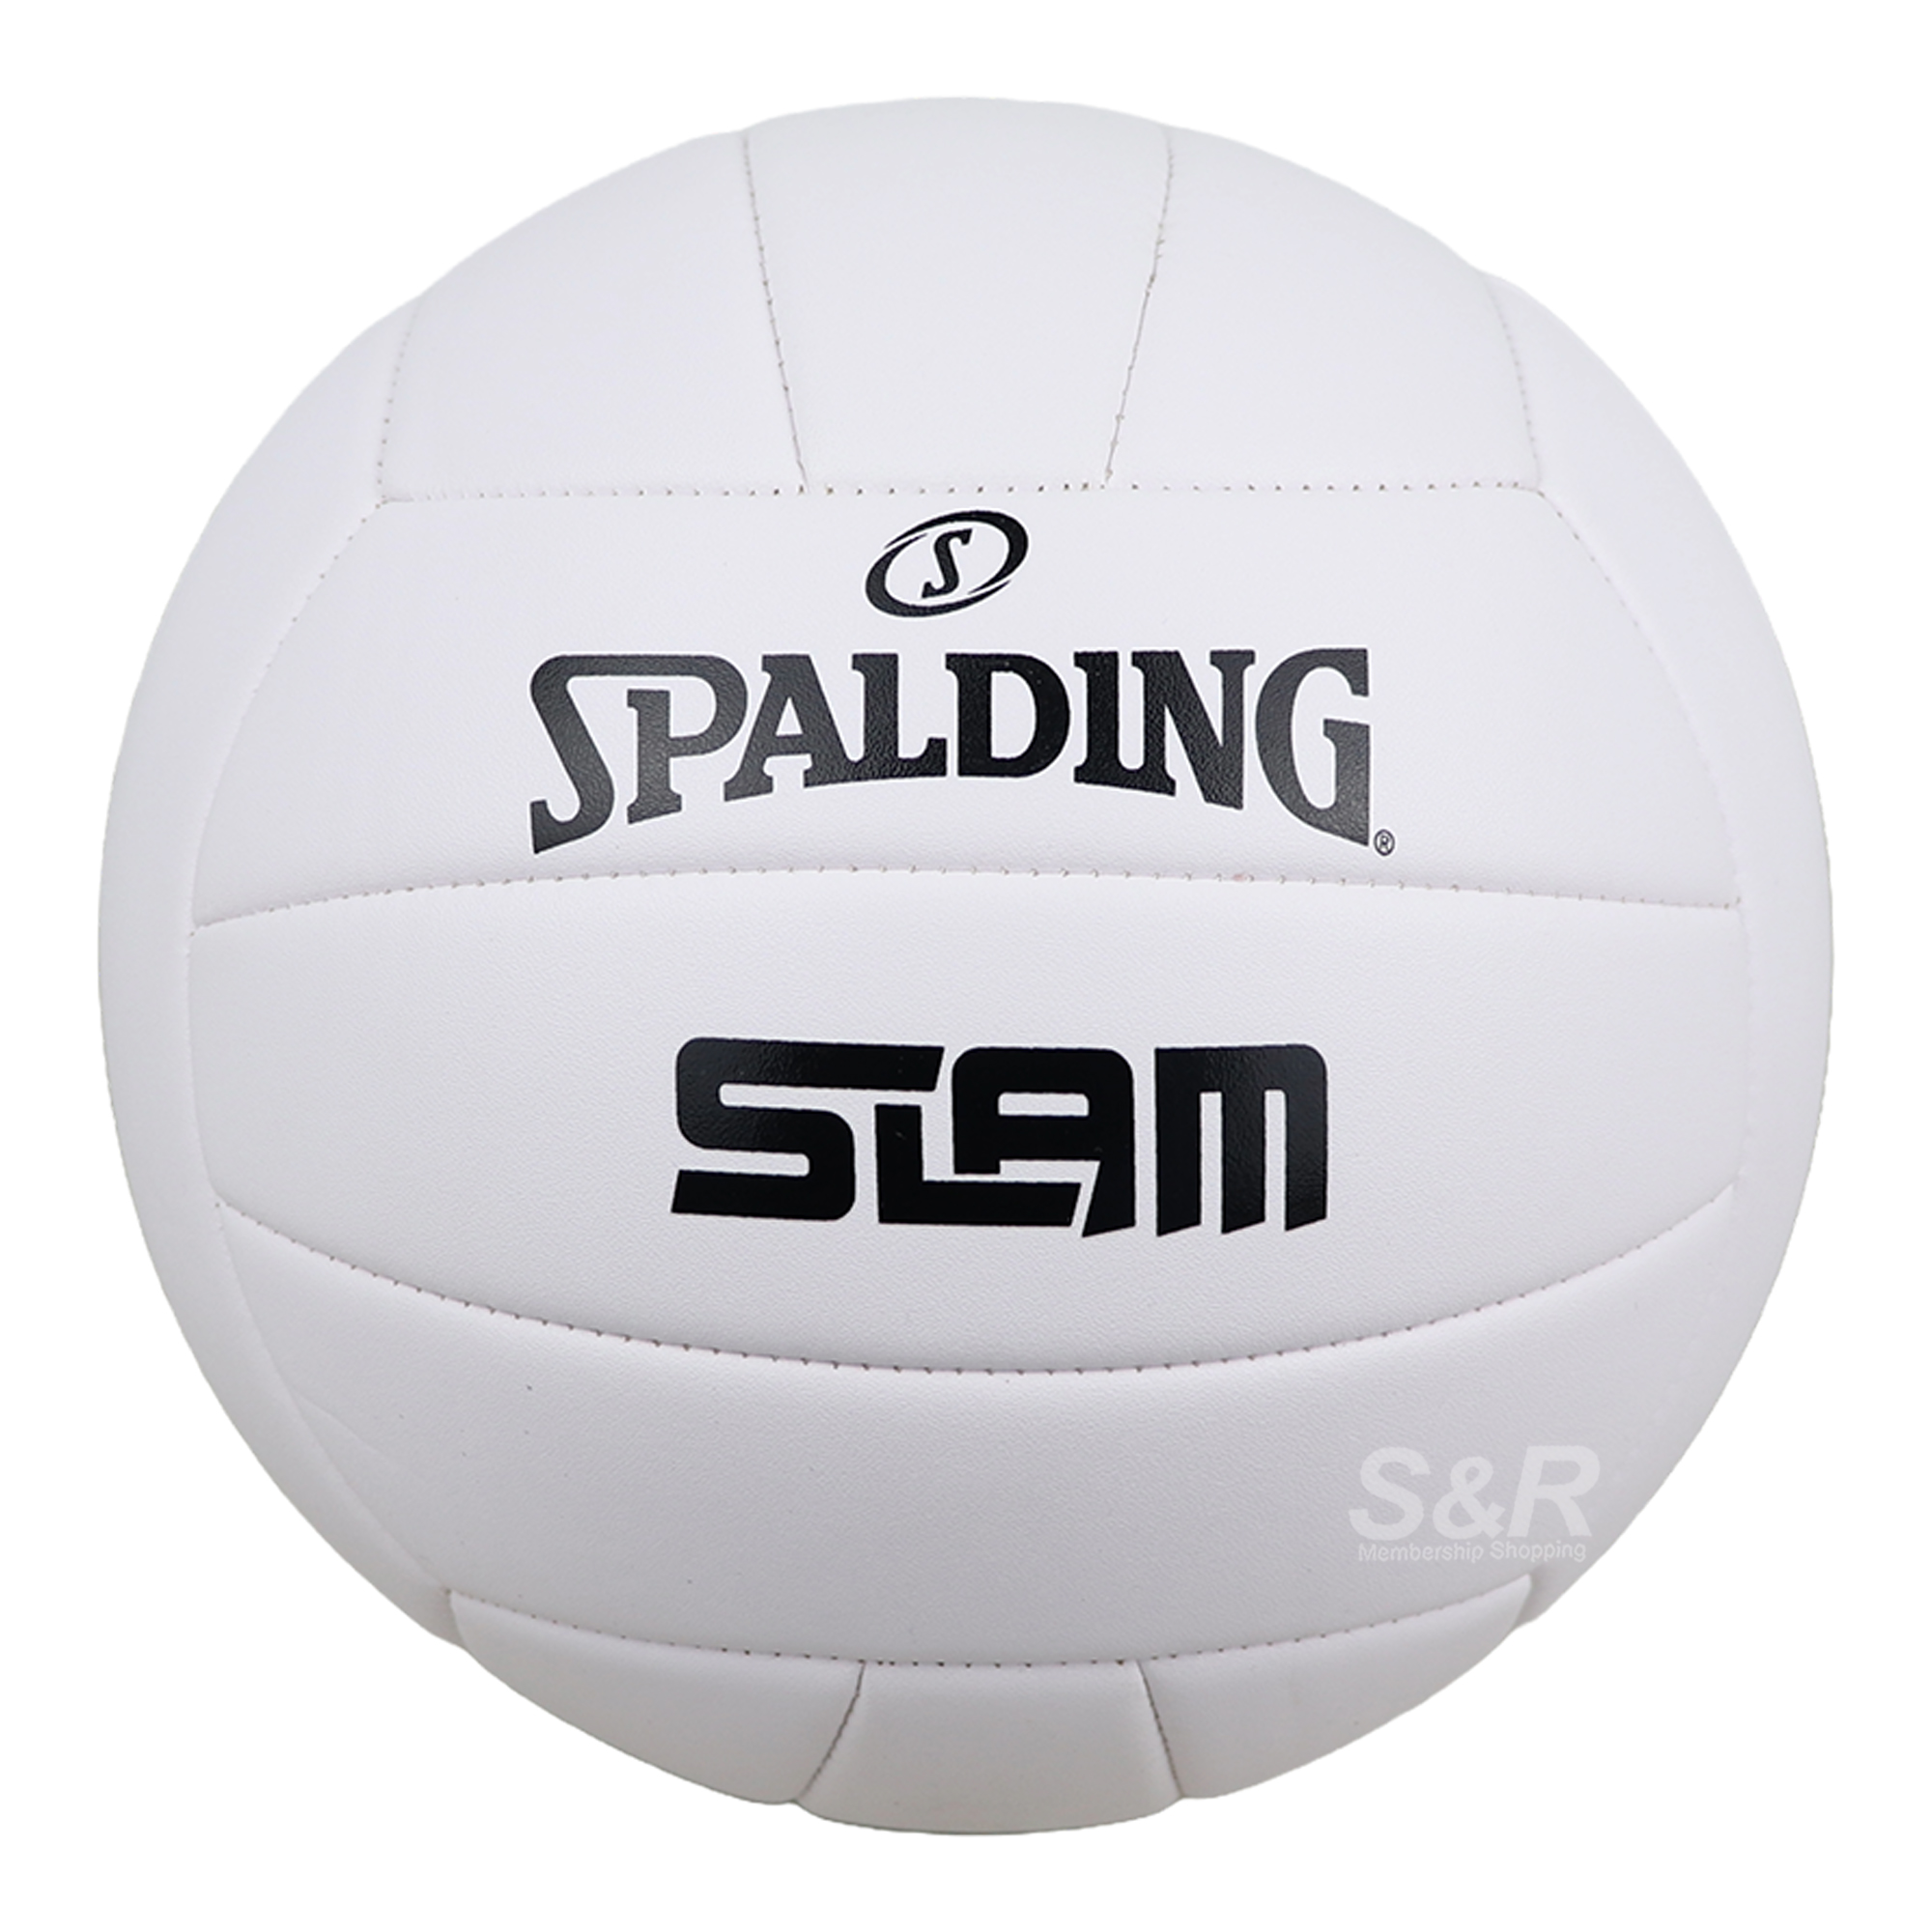 Spalding Slam Volleyball